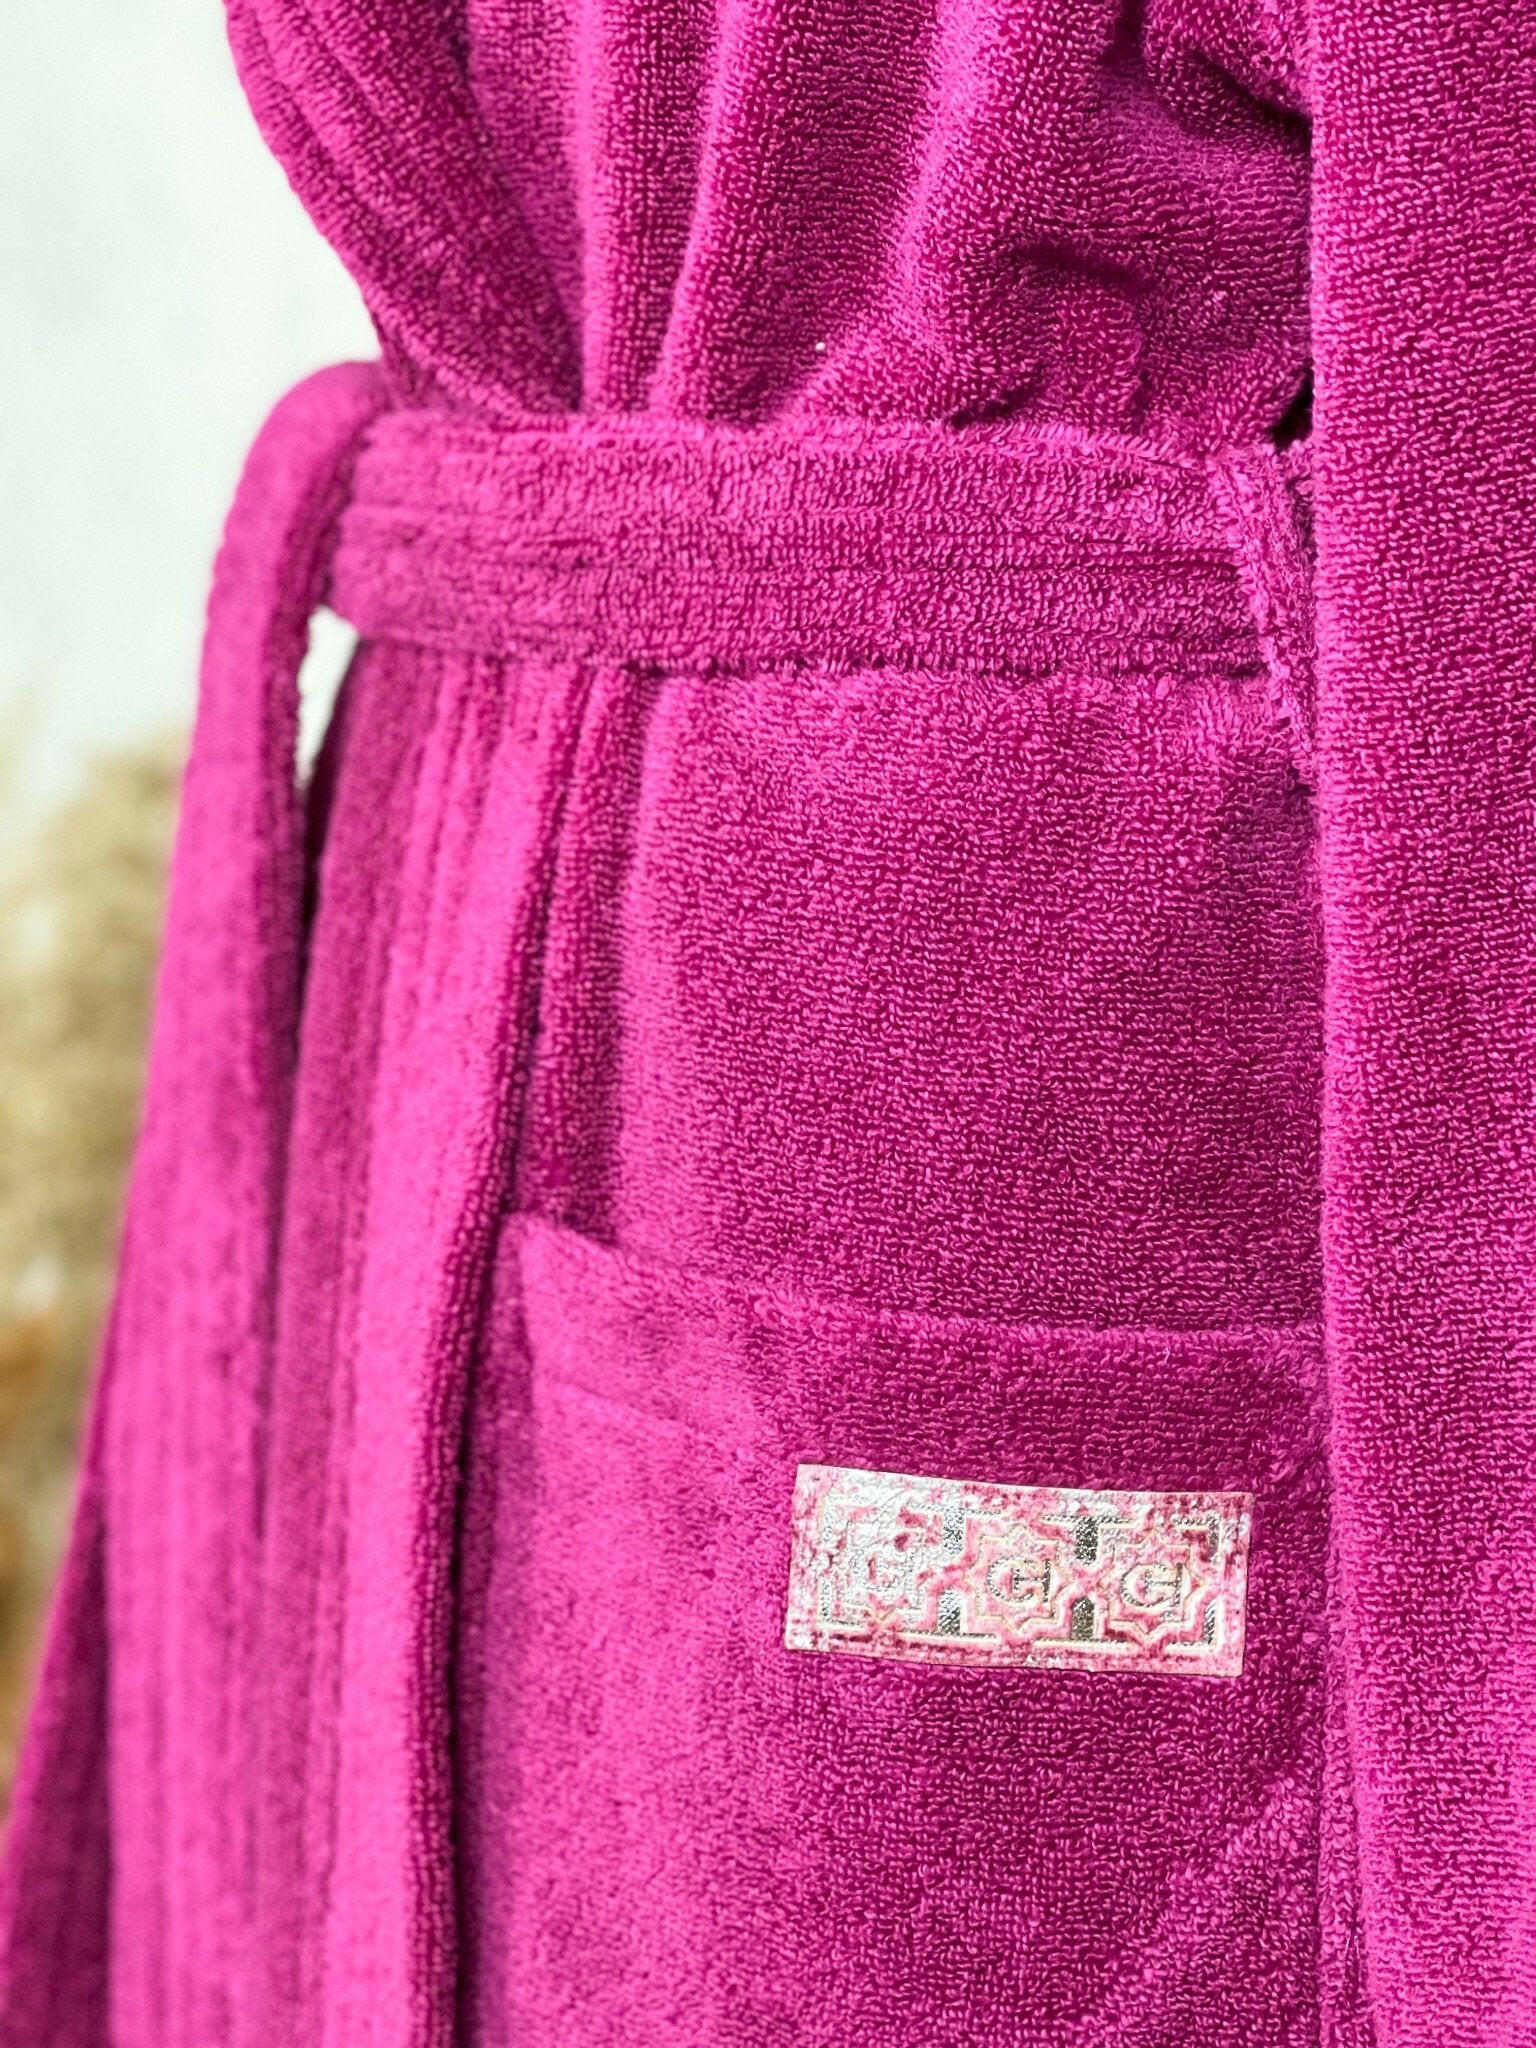 Akay Women's Pink Hooded Bathrobe, Best Luxury Micro Cotton Soft Turkish Robe Gown by Creative Home,BRW-HRSN-AK-S,BRW-HRSN-AK-M,BRW-HRSN-AK-L,BRW-HRSN-AK-XL,BRW-HRSN-AK-XXL